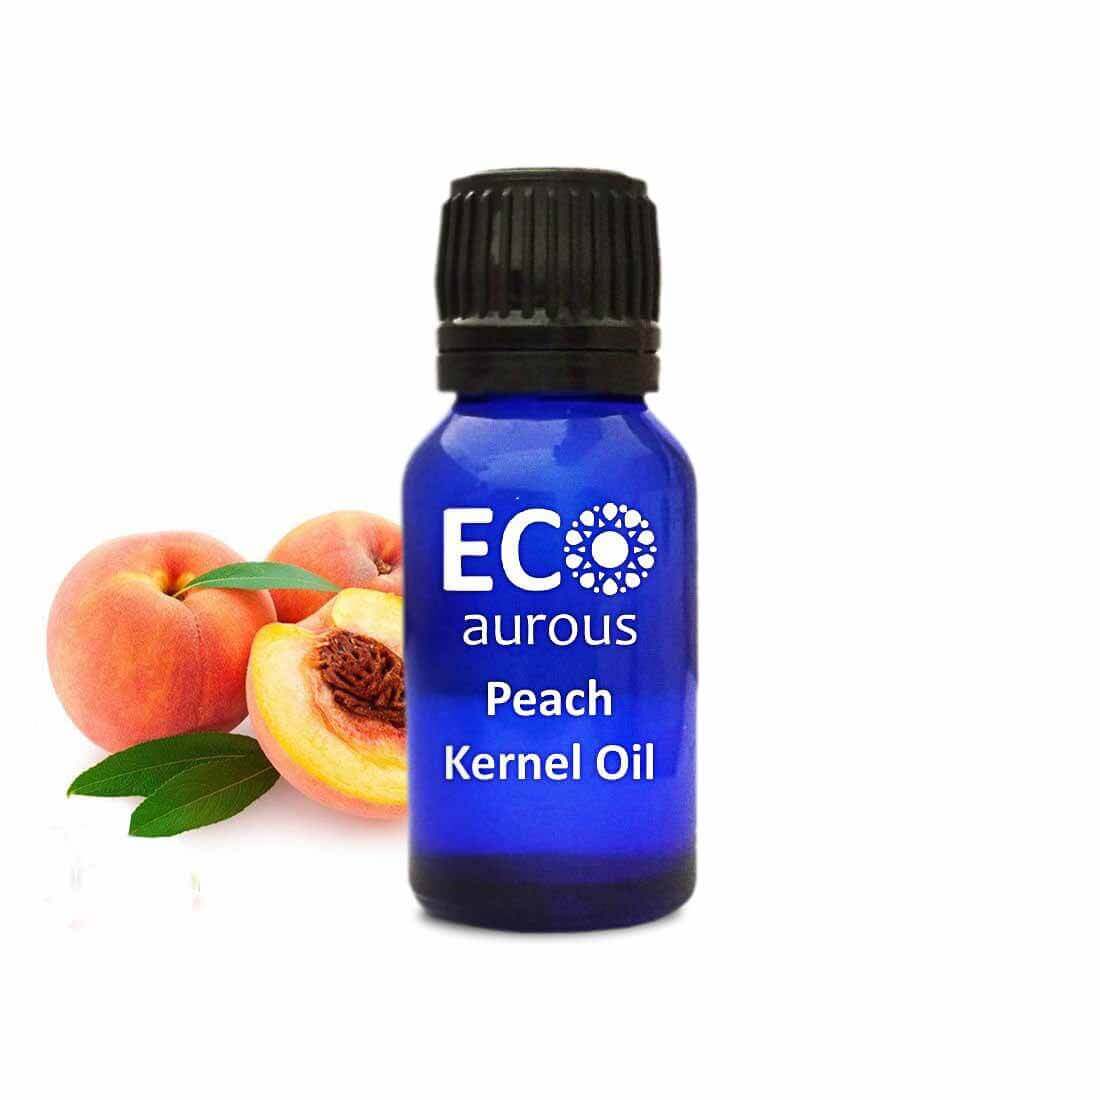 Buy Online Peach Kernel Essential Oil at Low Price